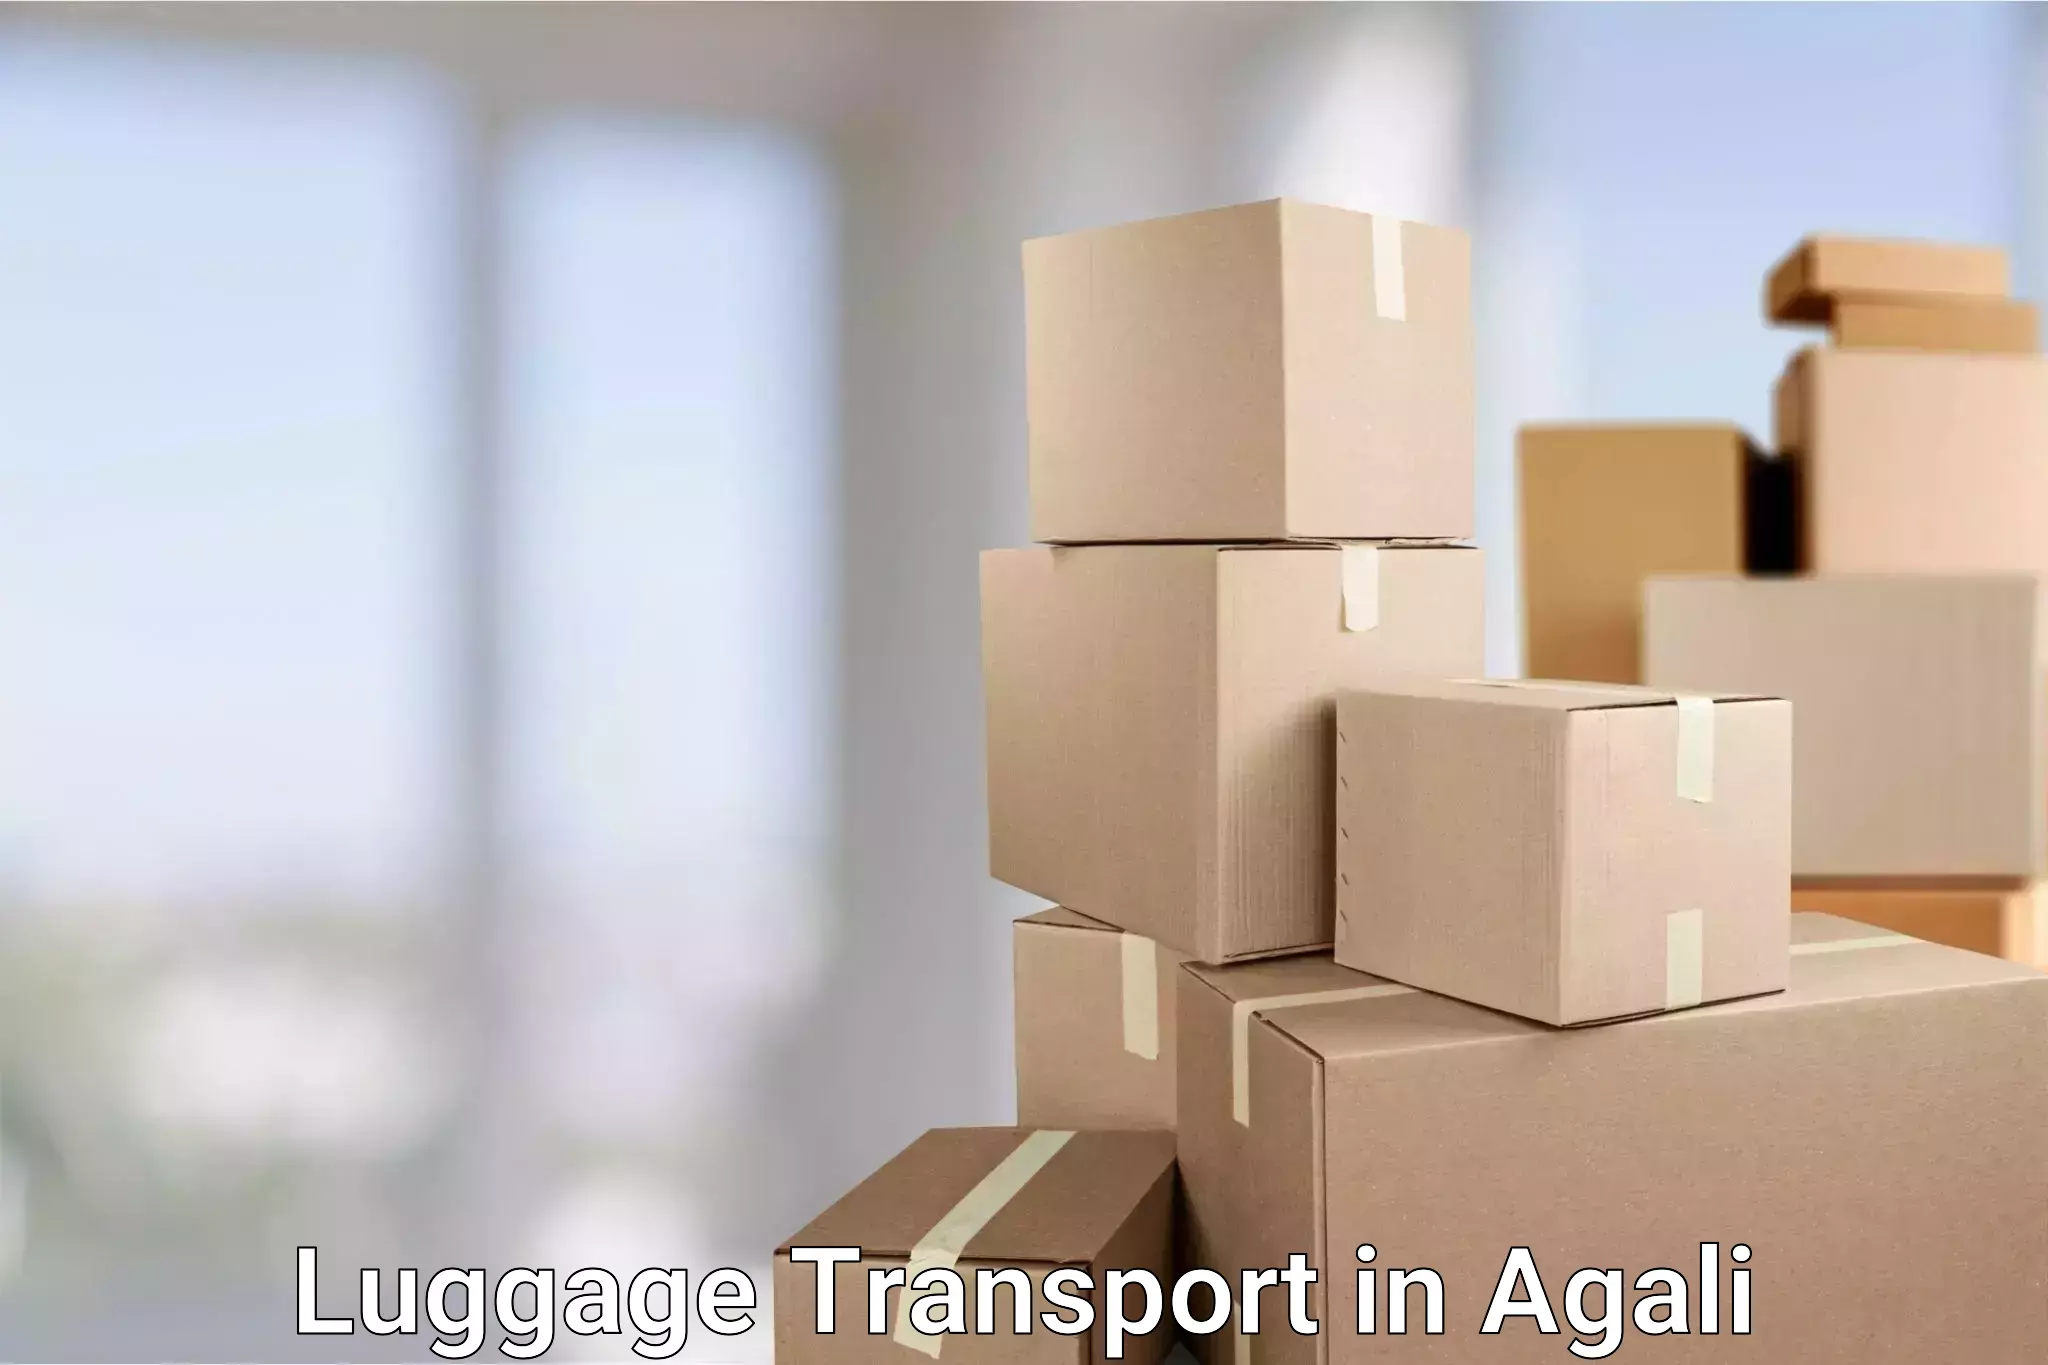 Luggage transit service in Agali